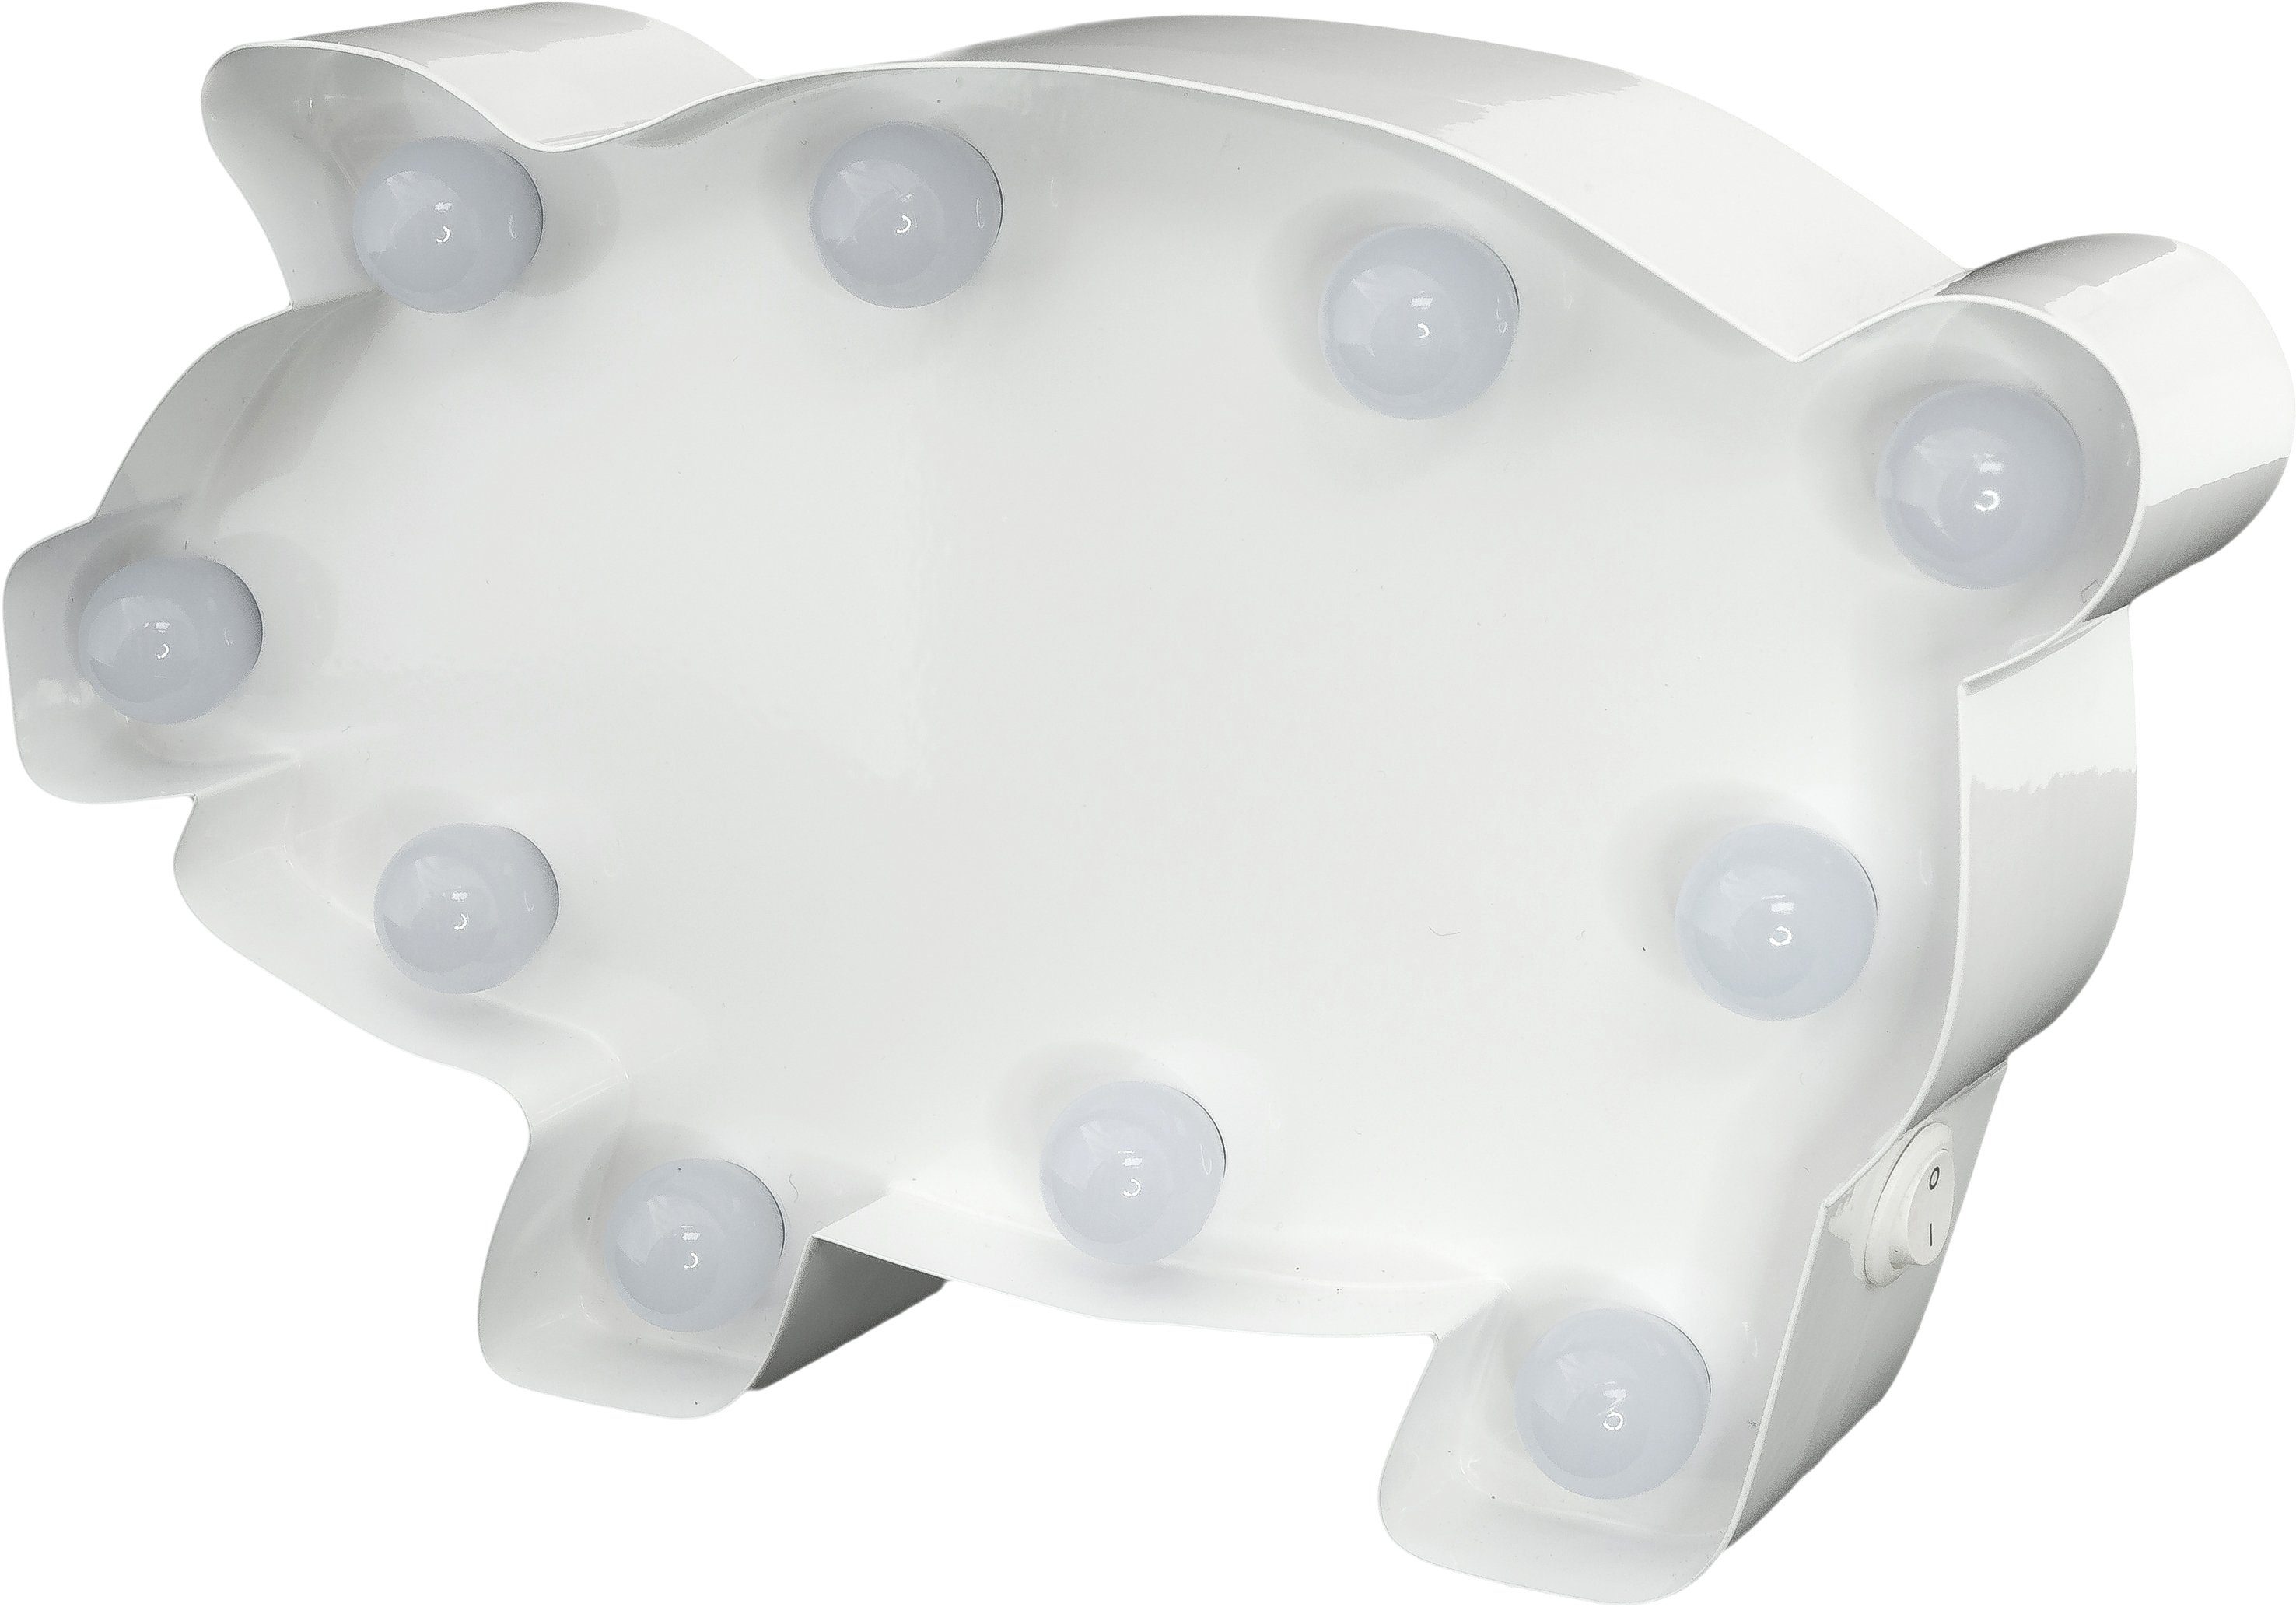 Pig, 10 Wandlampe, Pig - integriert, Dekolicht fest Warmweiß, LED LIGHTS mit festverbauten MARQUEE Tischlampe 23x14 LEDs cm LED